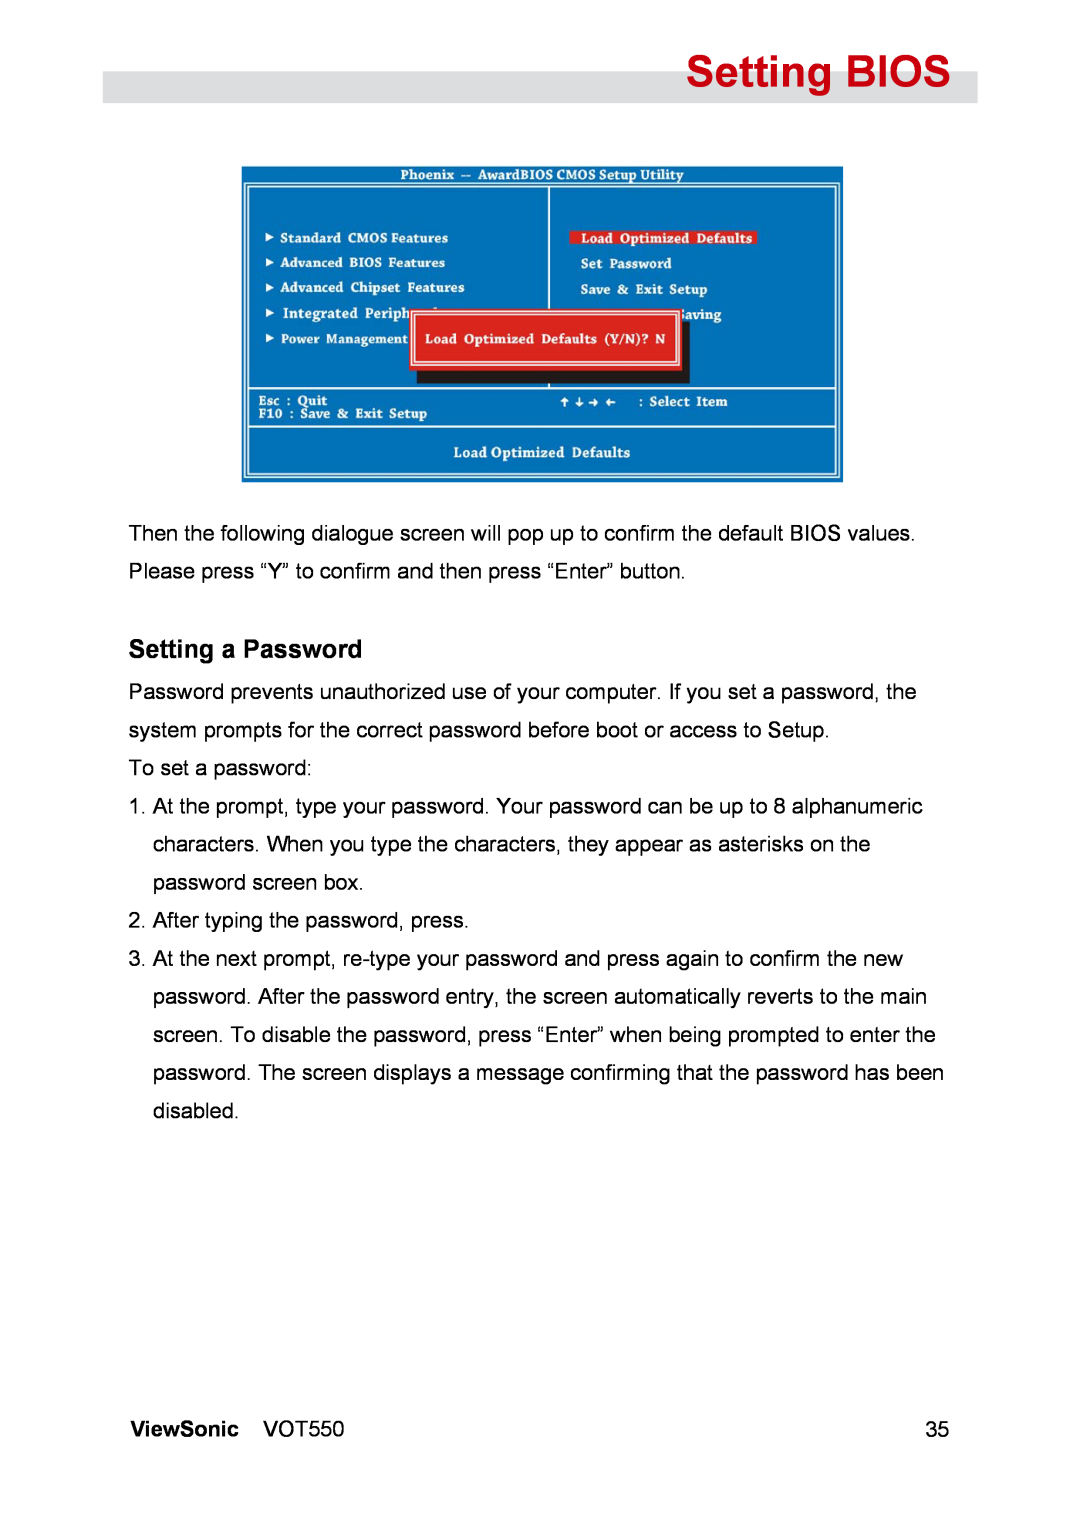 ViewSonic manual Setting a Password, Setting BIOS, ViewSonic VOT550 